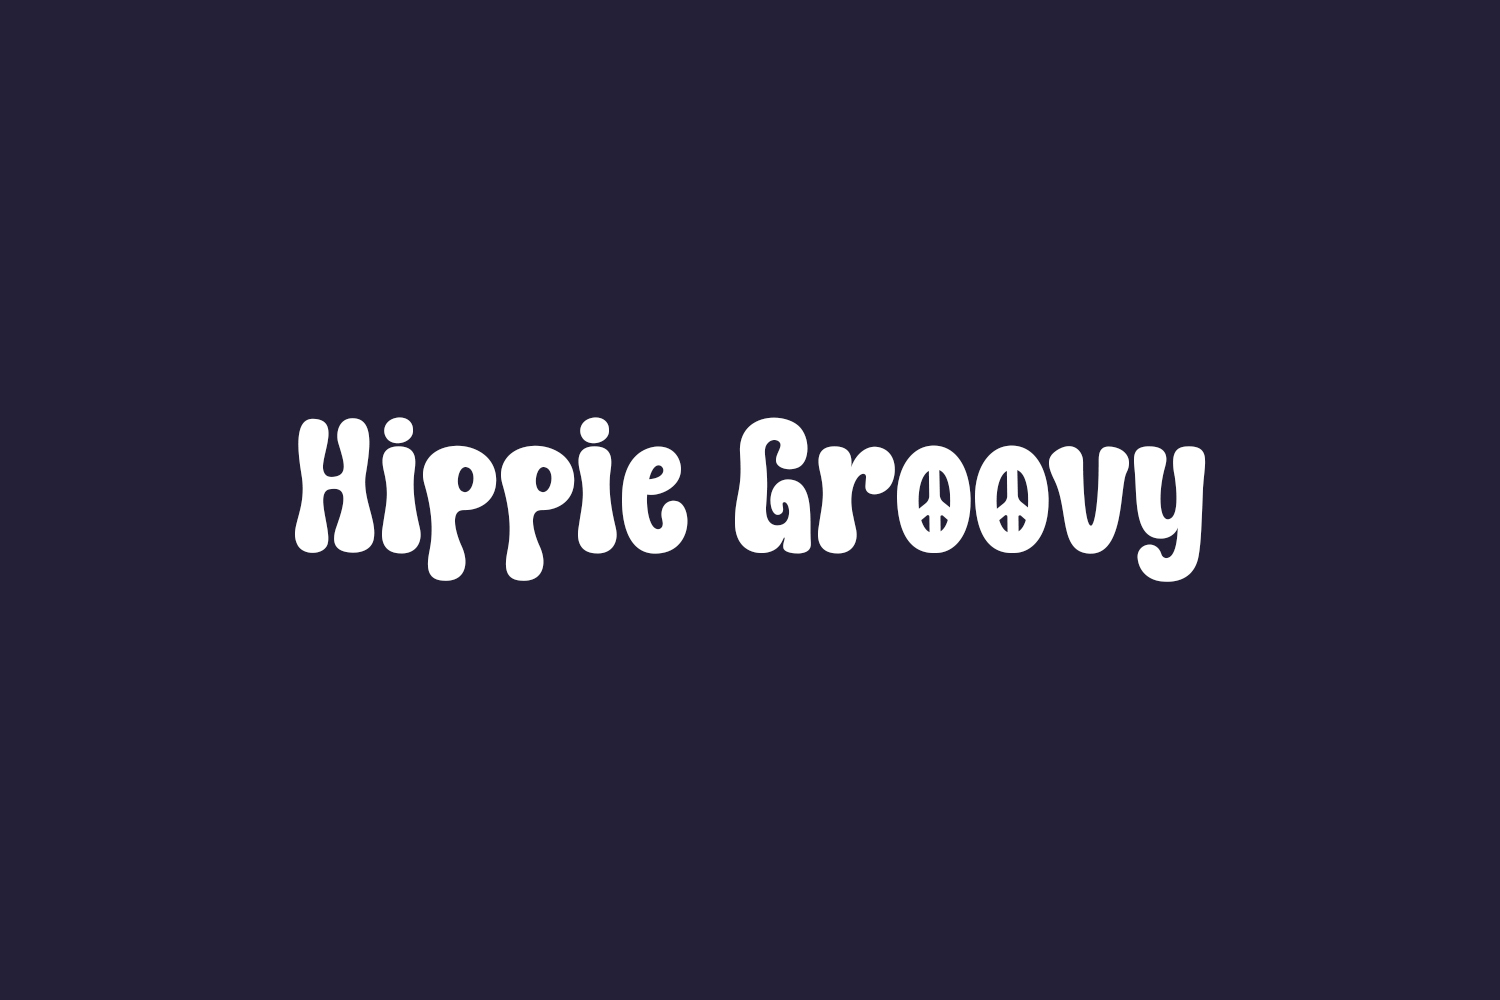 Hippie Groovy Free Font